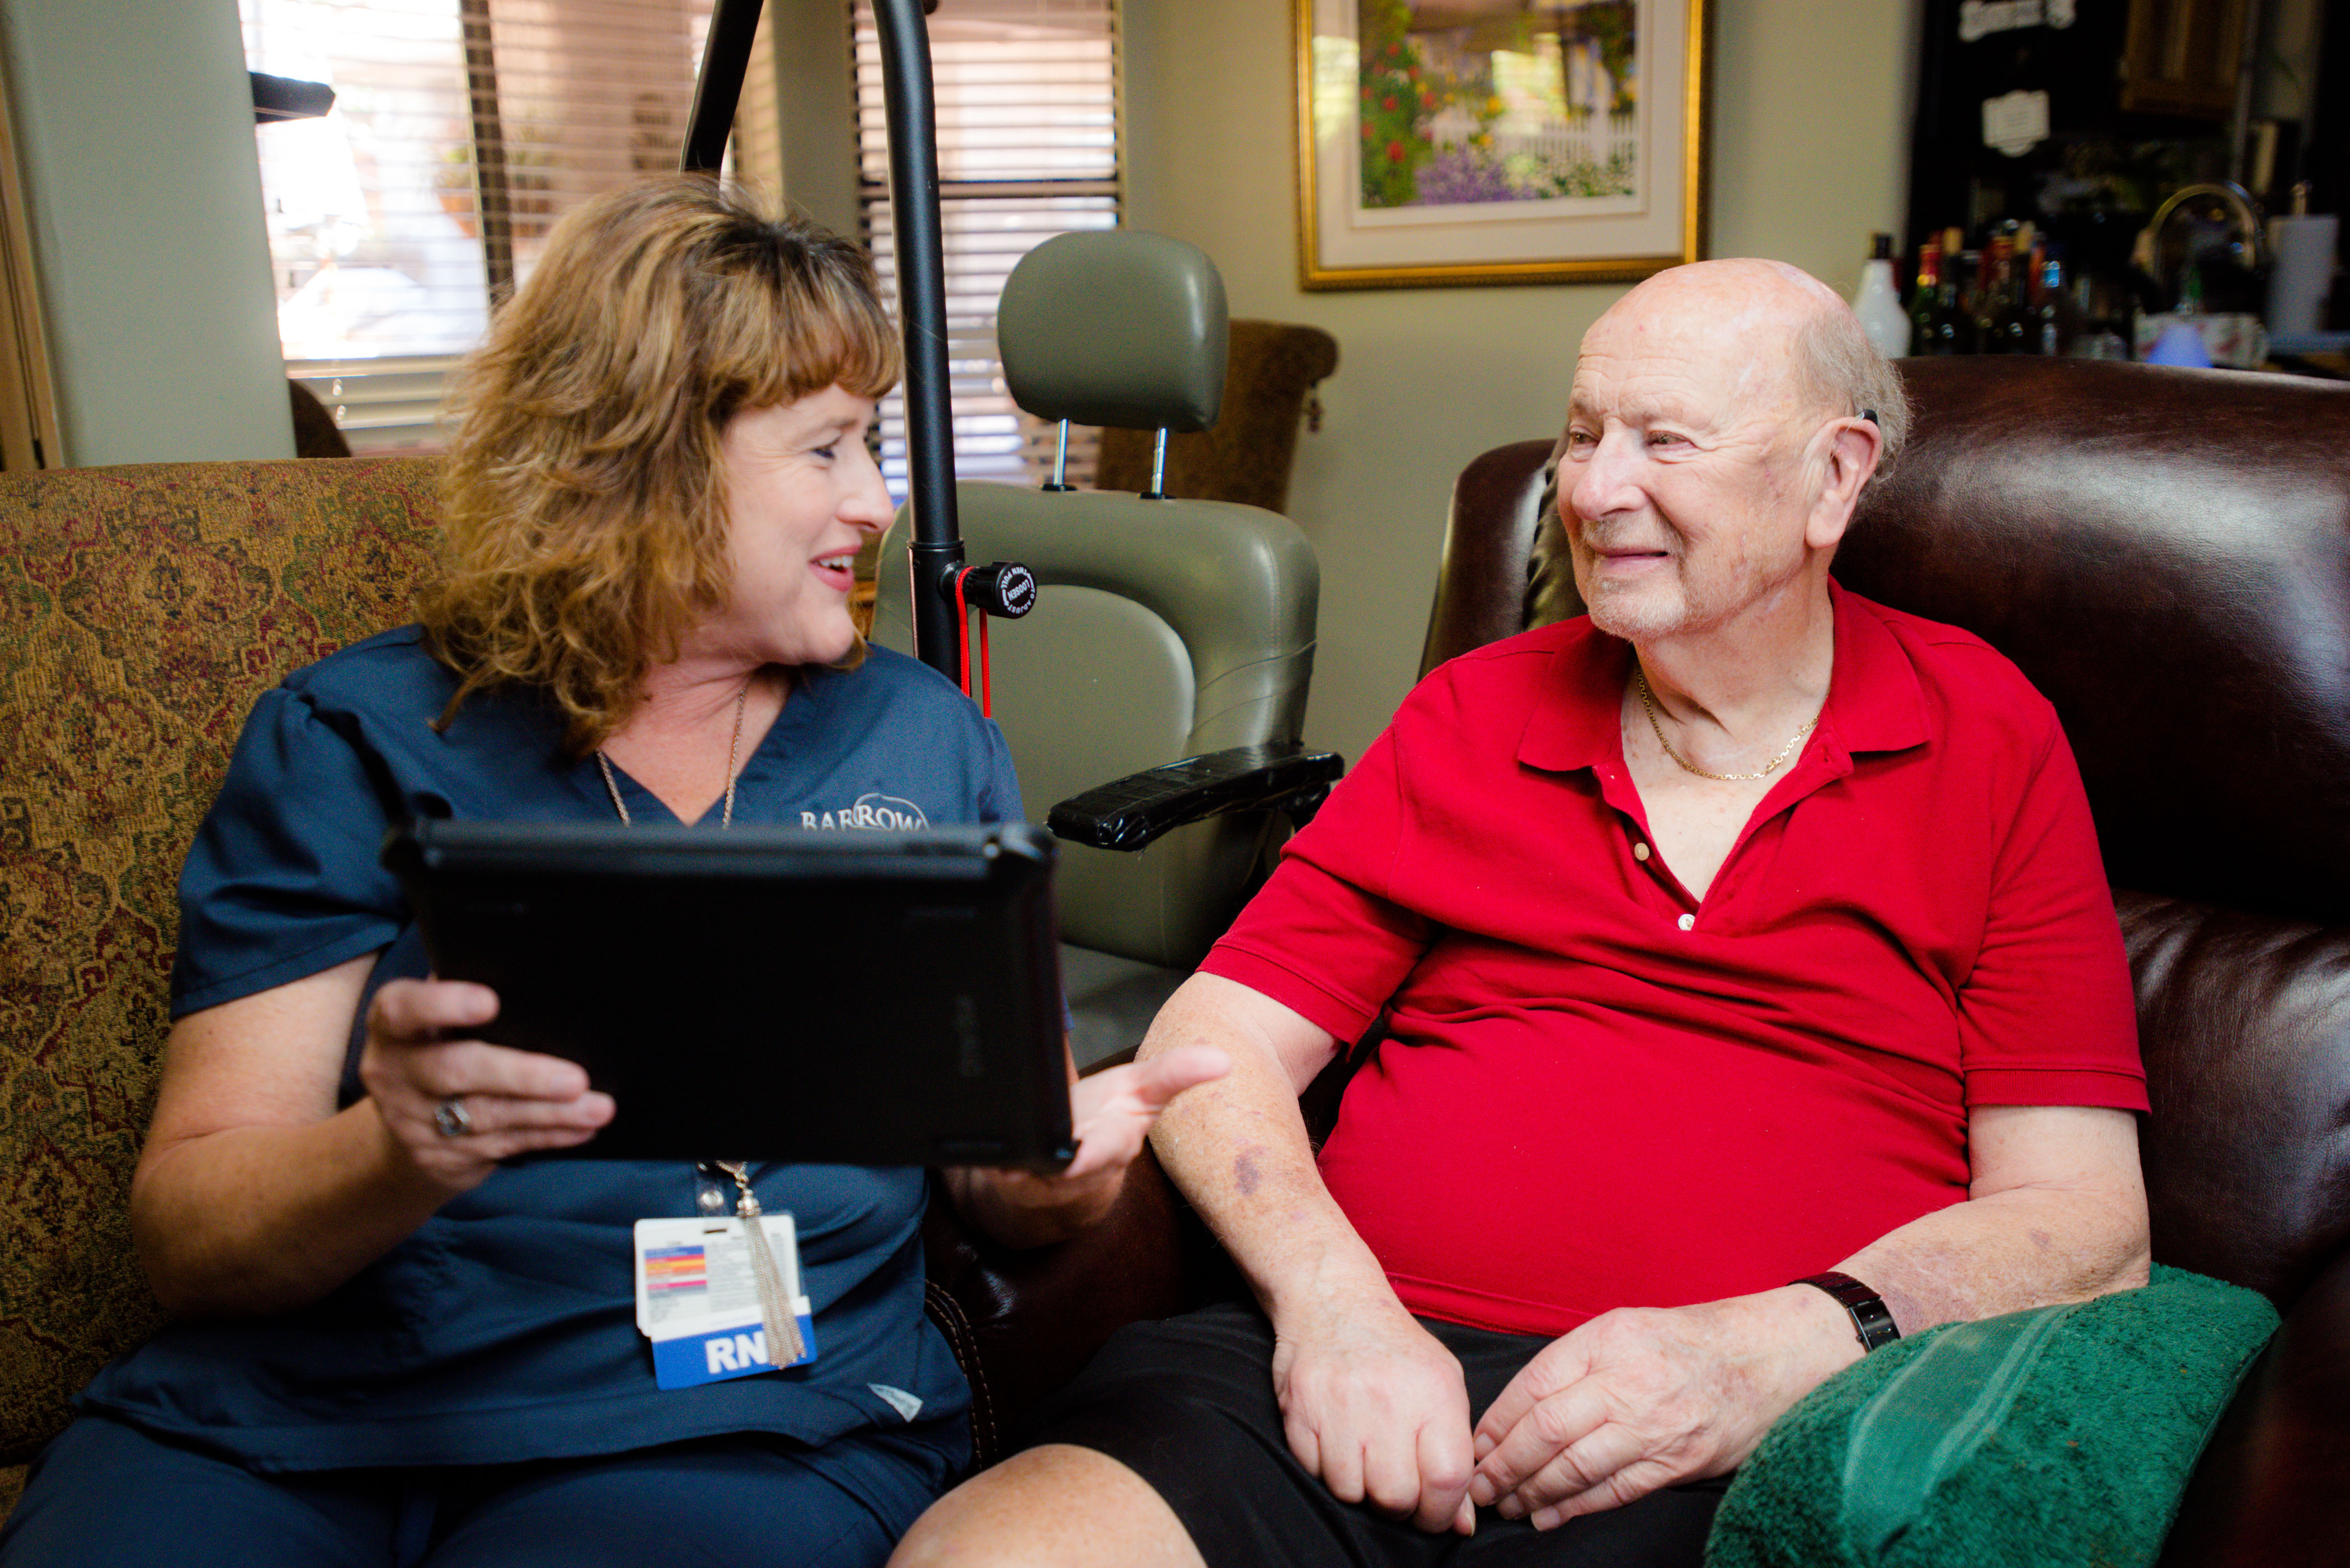 The new program brings Barrow care into patient homes via telemedicine